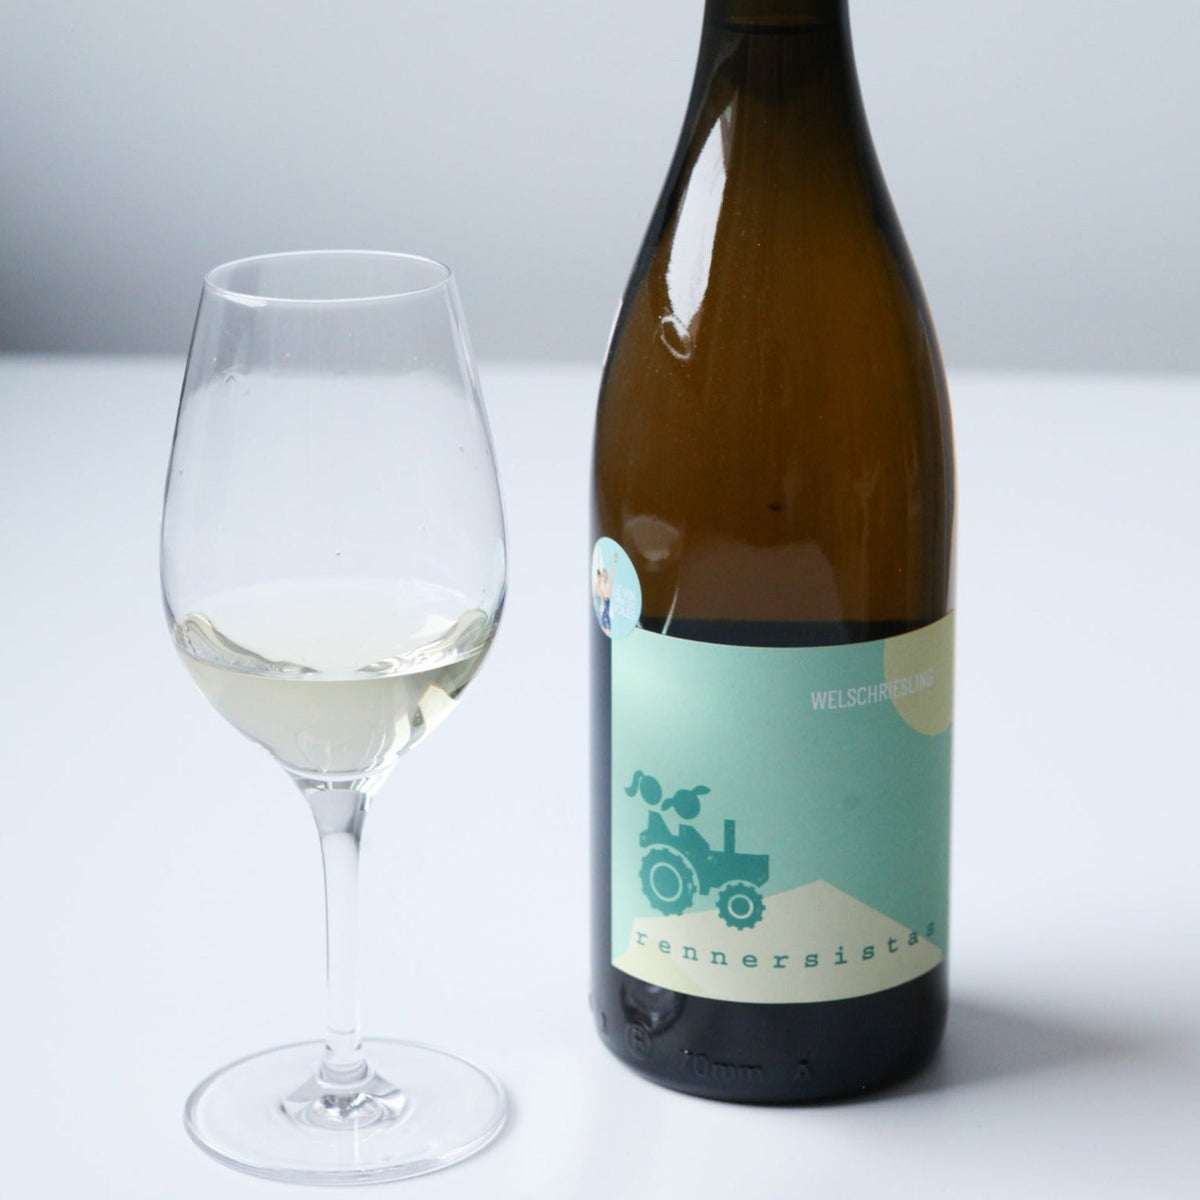 Welschriesling 2021 - Blanc - Rennersistas - Le vin dans les voiles